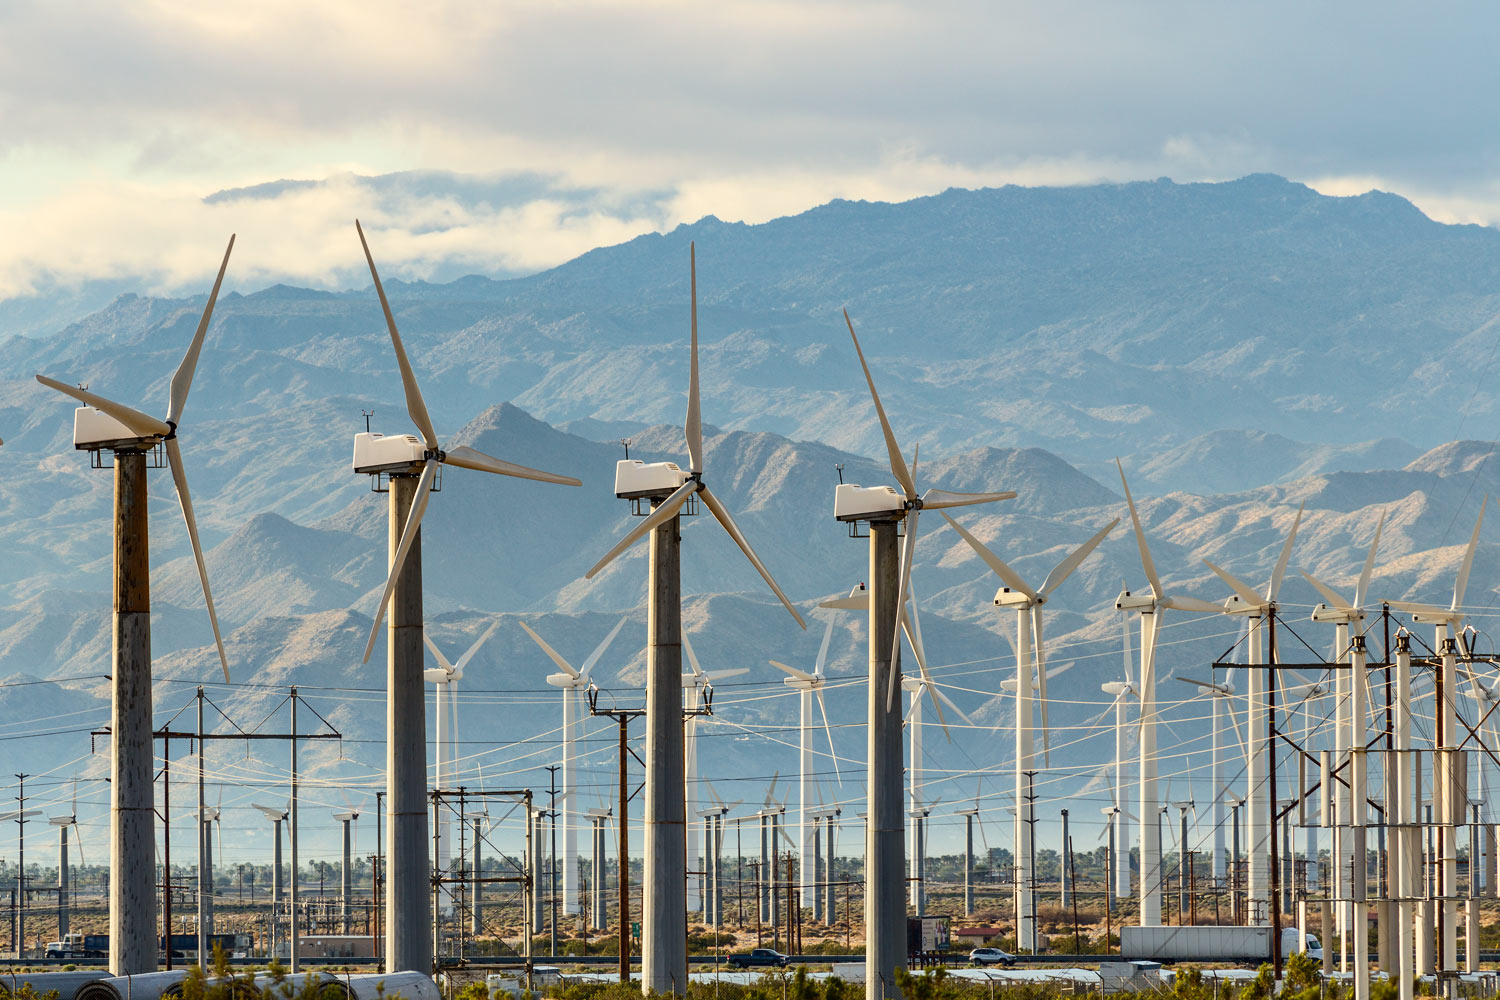  San Gorgonio Pass Wind Farm. Palm Springs, CA. Study #6. 2018 (GPS N/A)